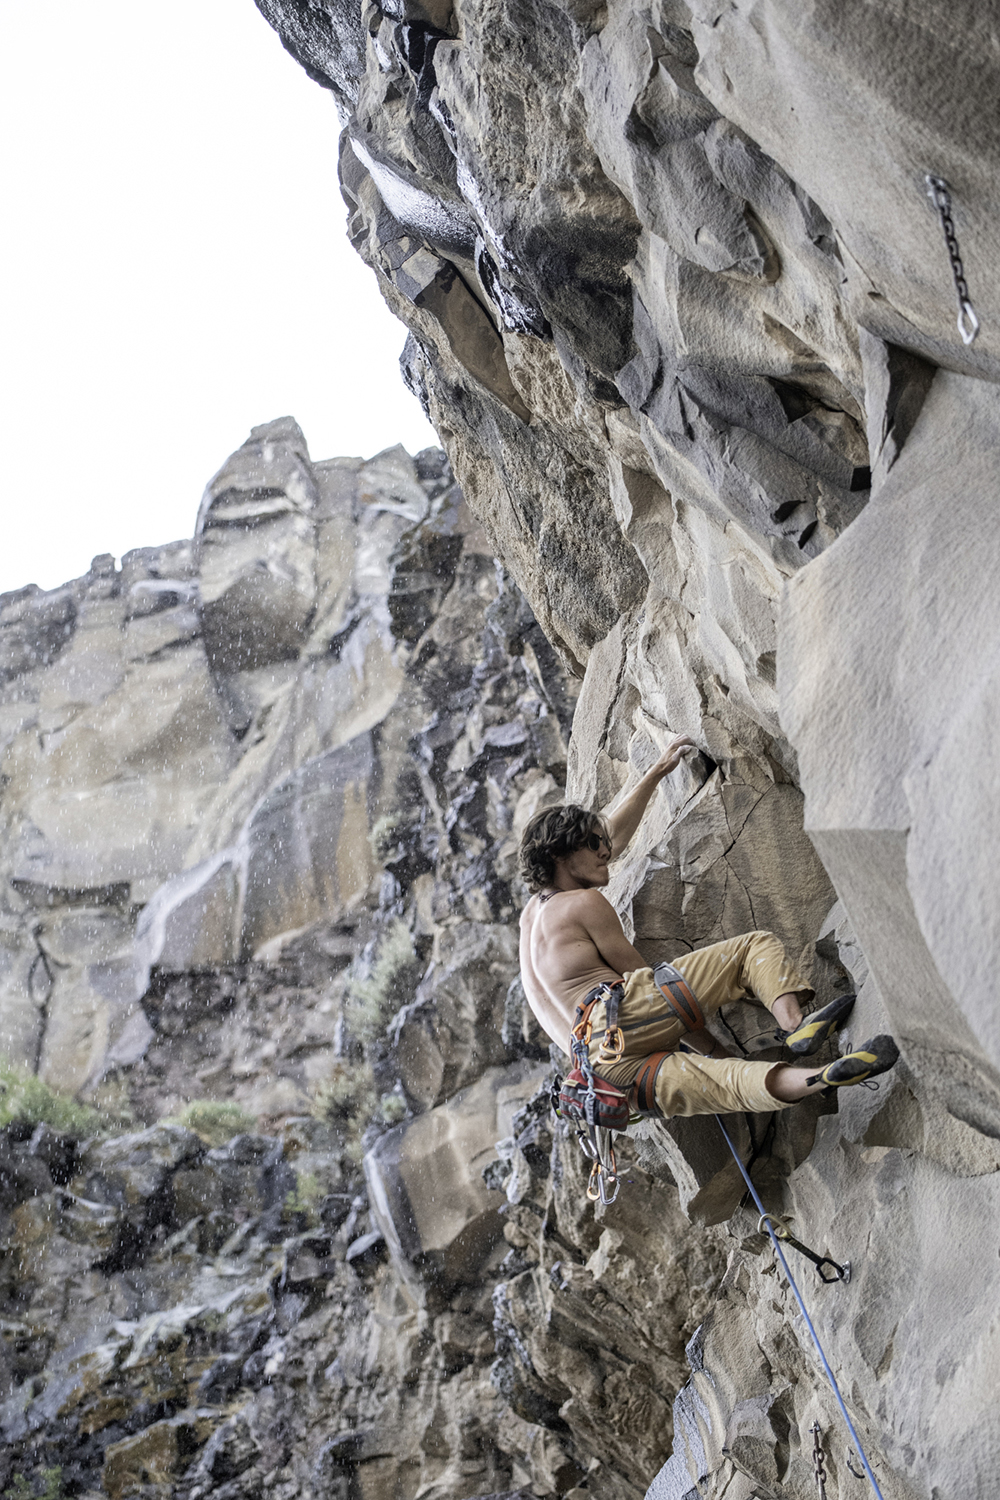 A person rock climbs in Oregon.